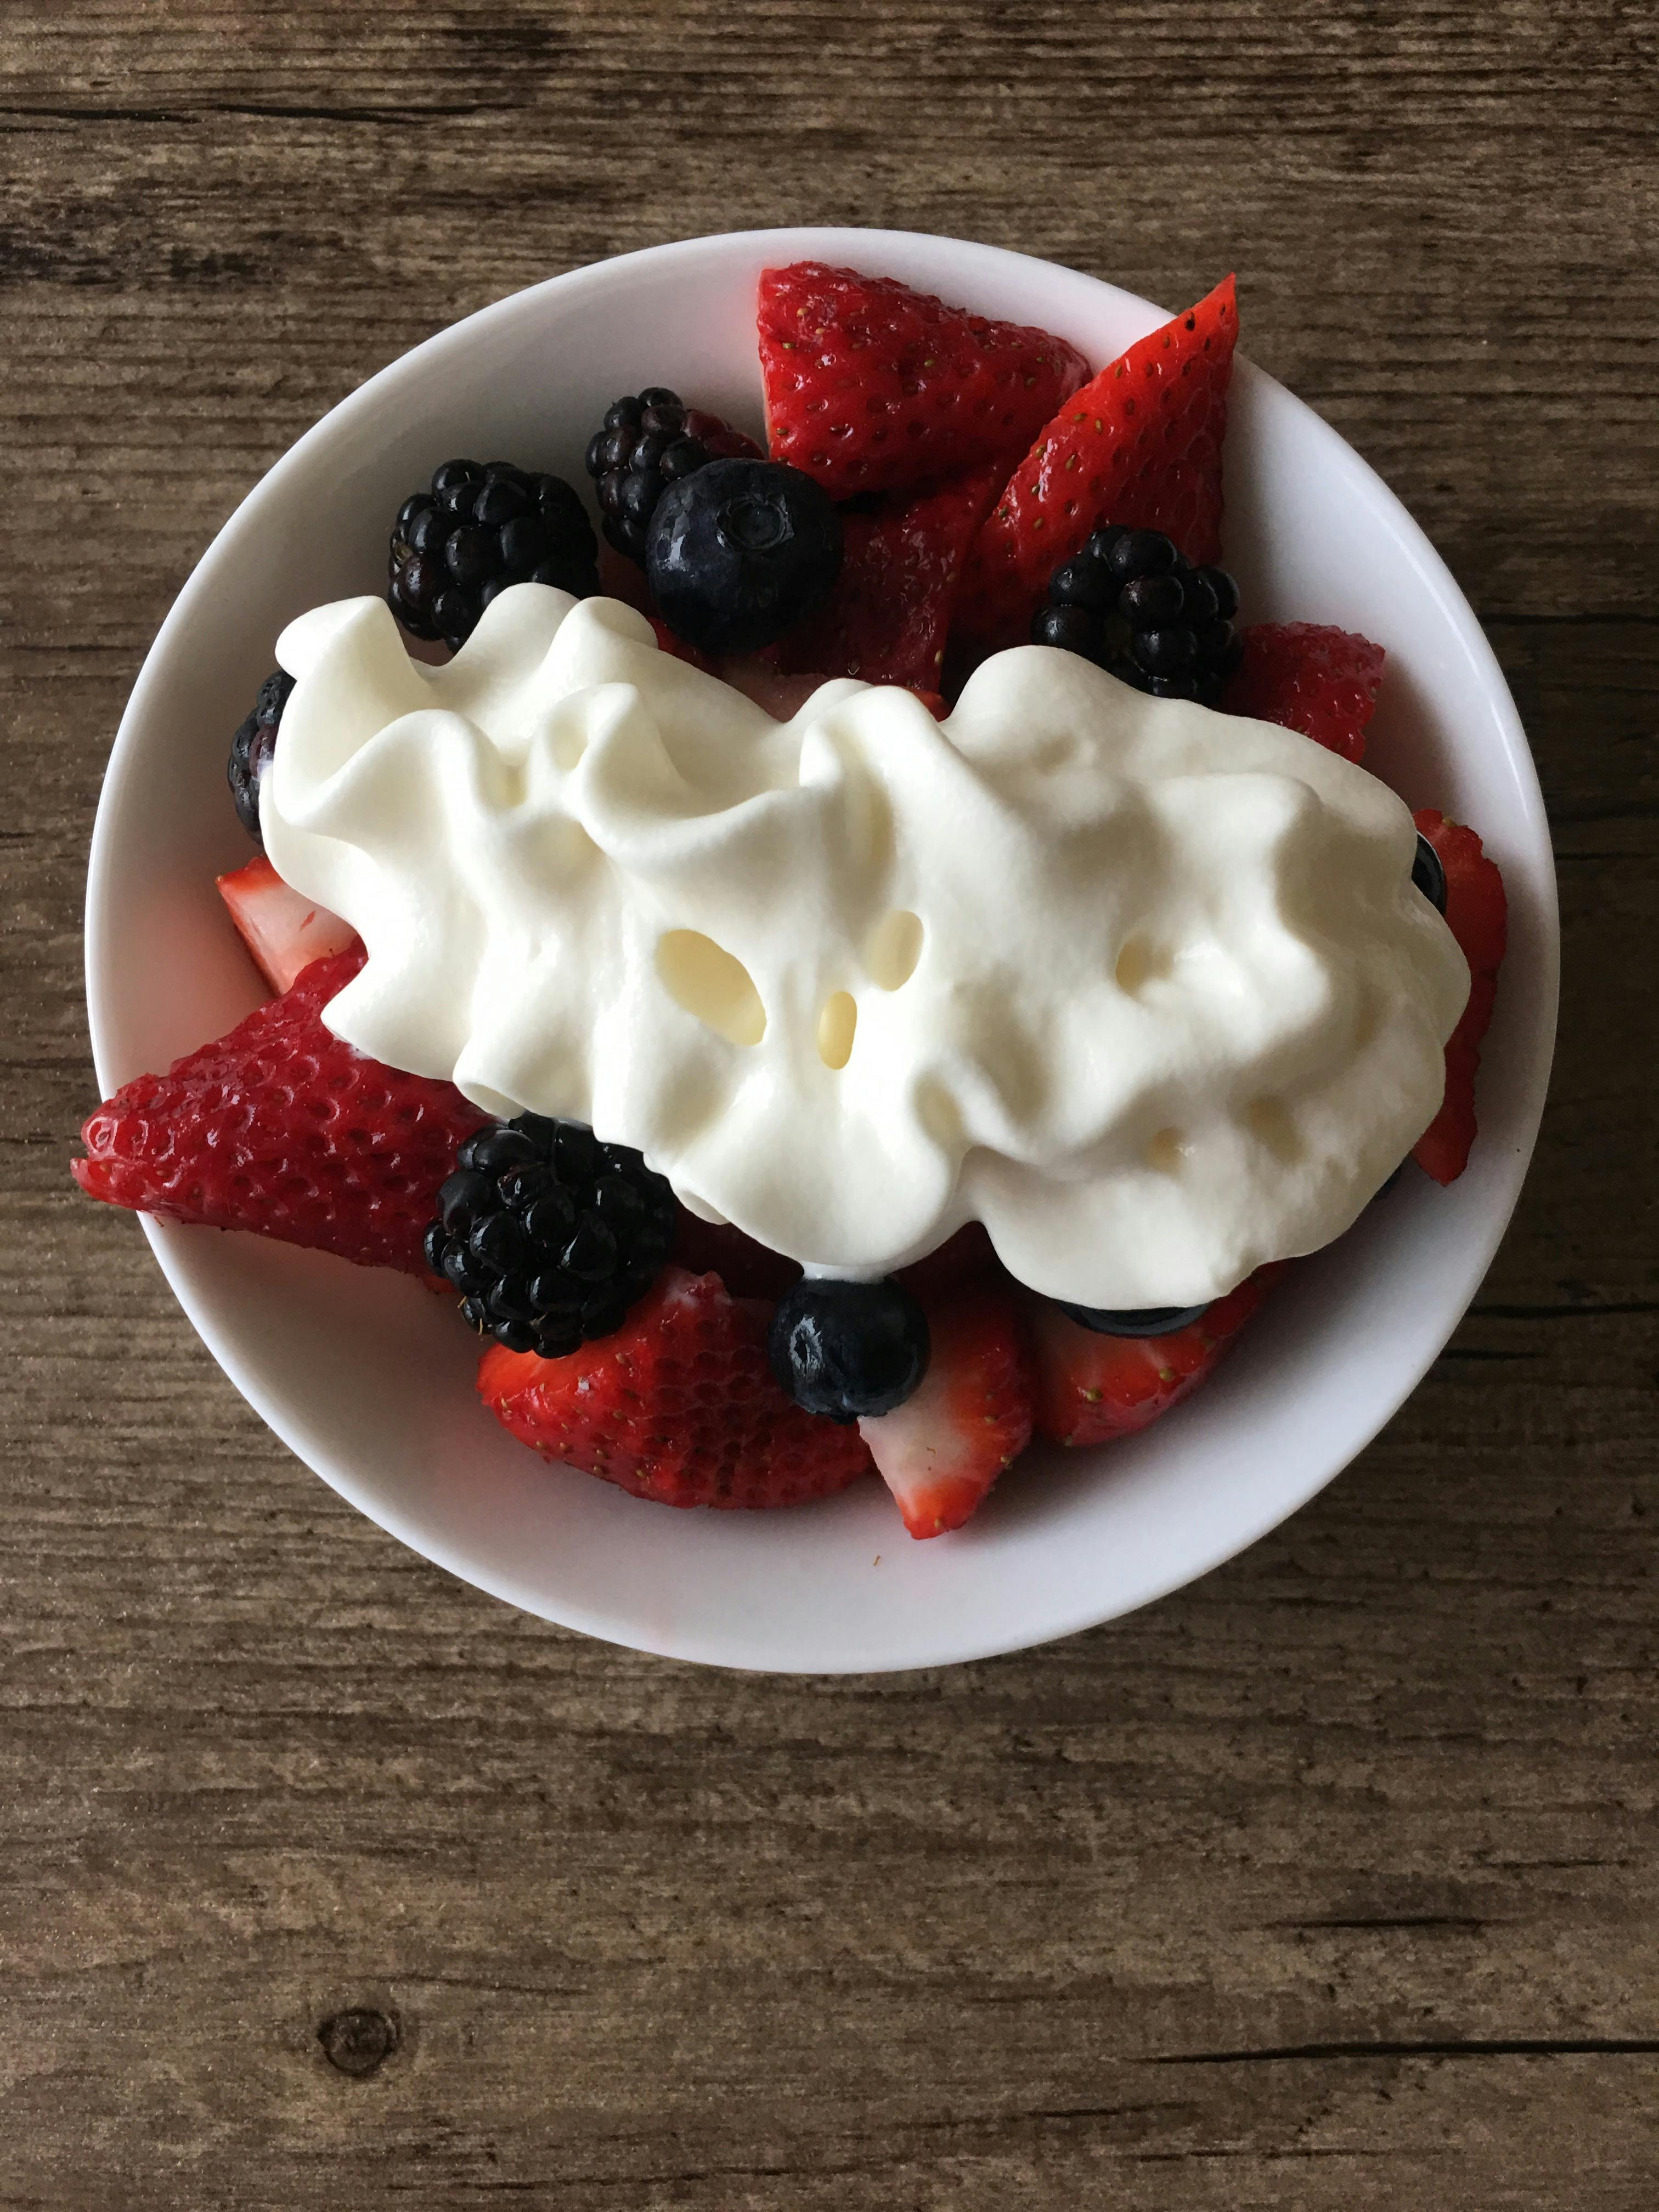 Free stock photo of mixed berries whipped cream